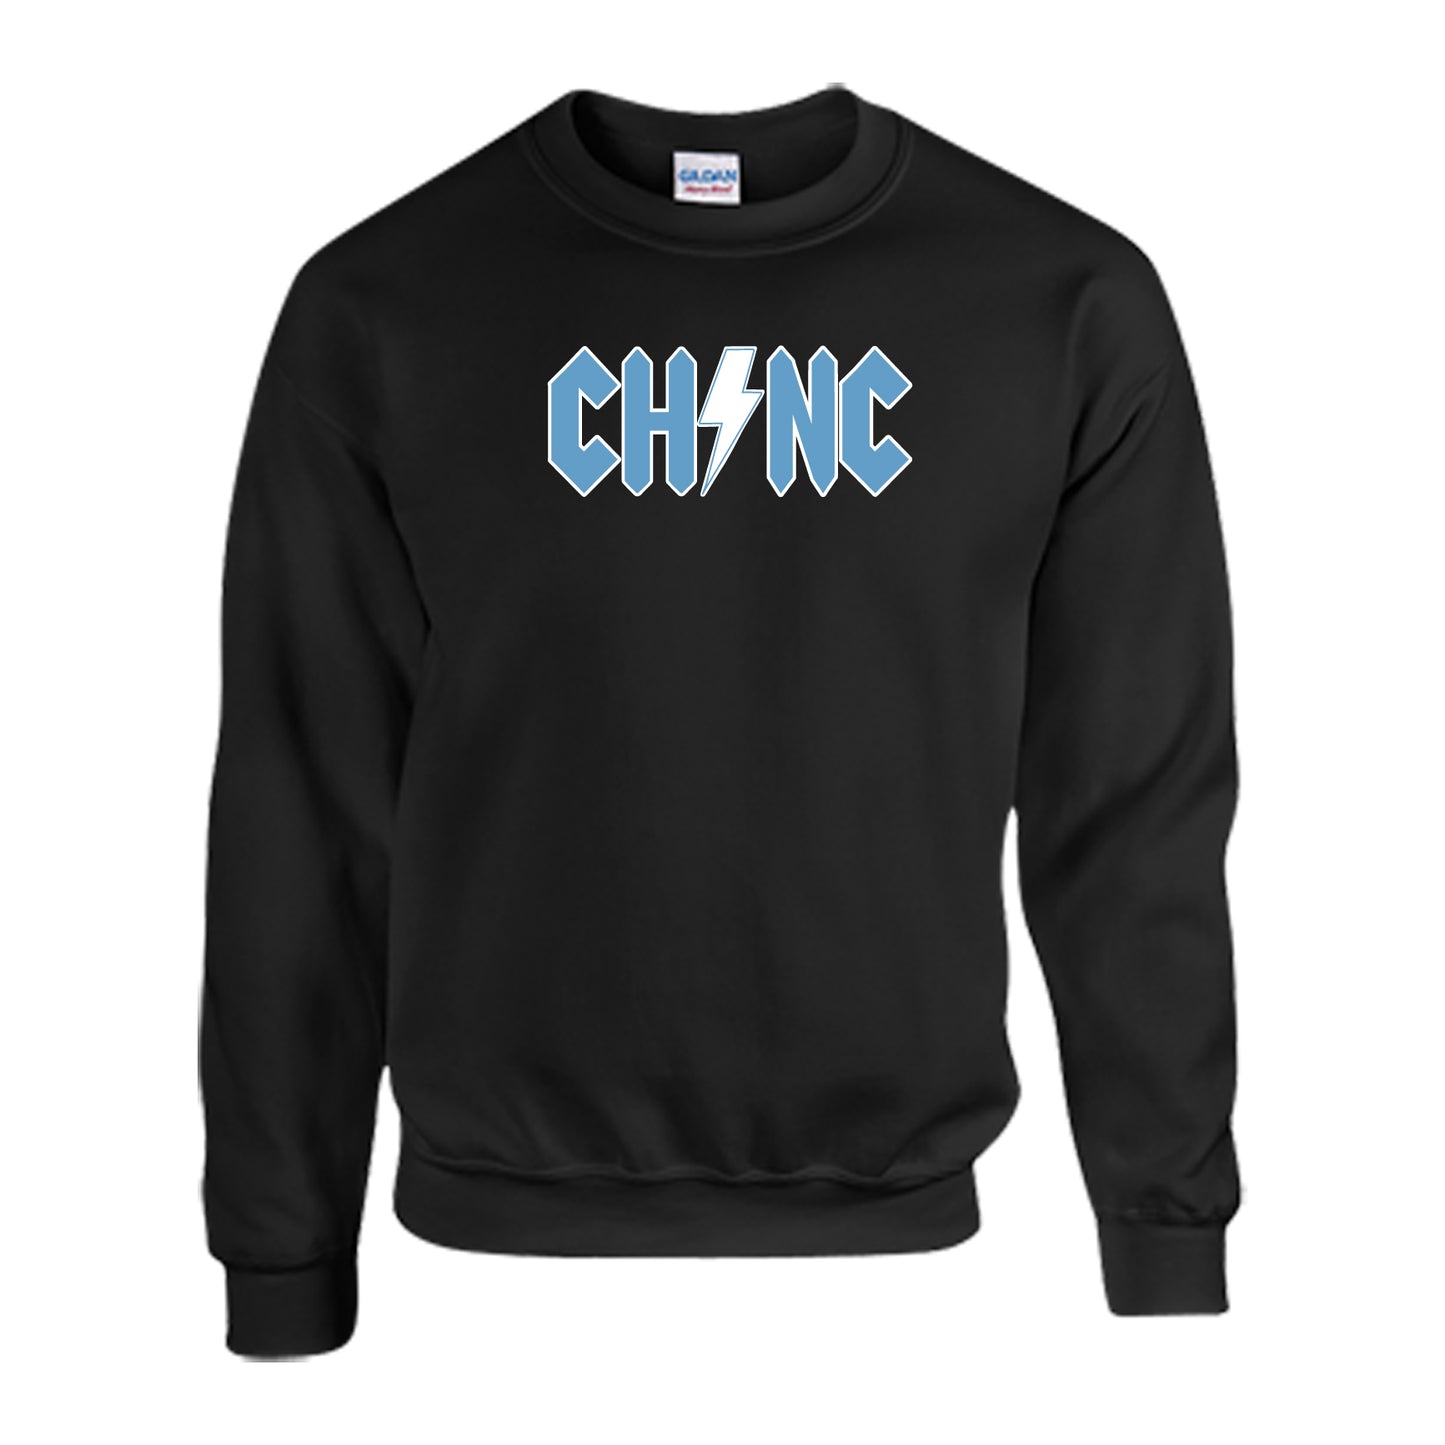 Chapel Hill NC Crewneck Sweatshirt in Black with Rock Font